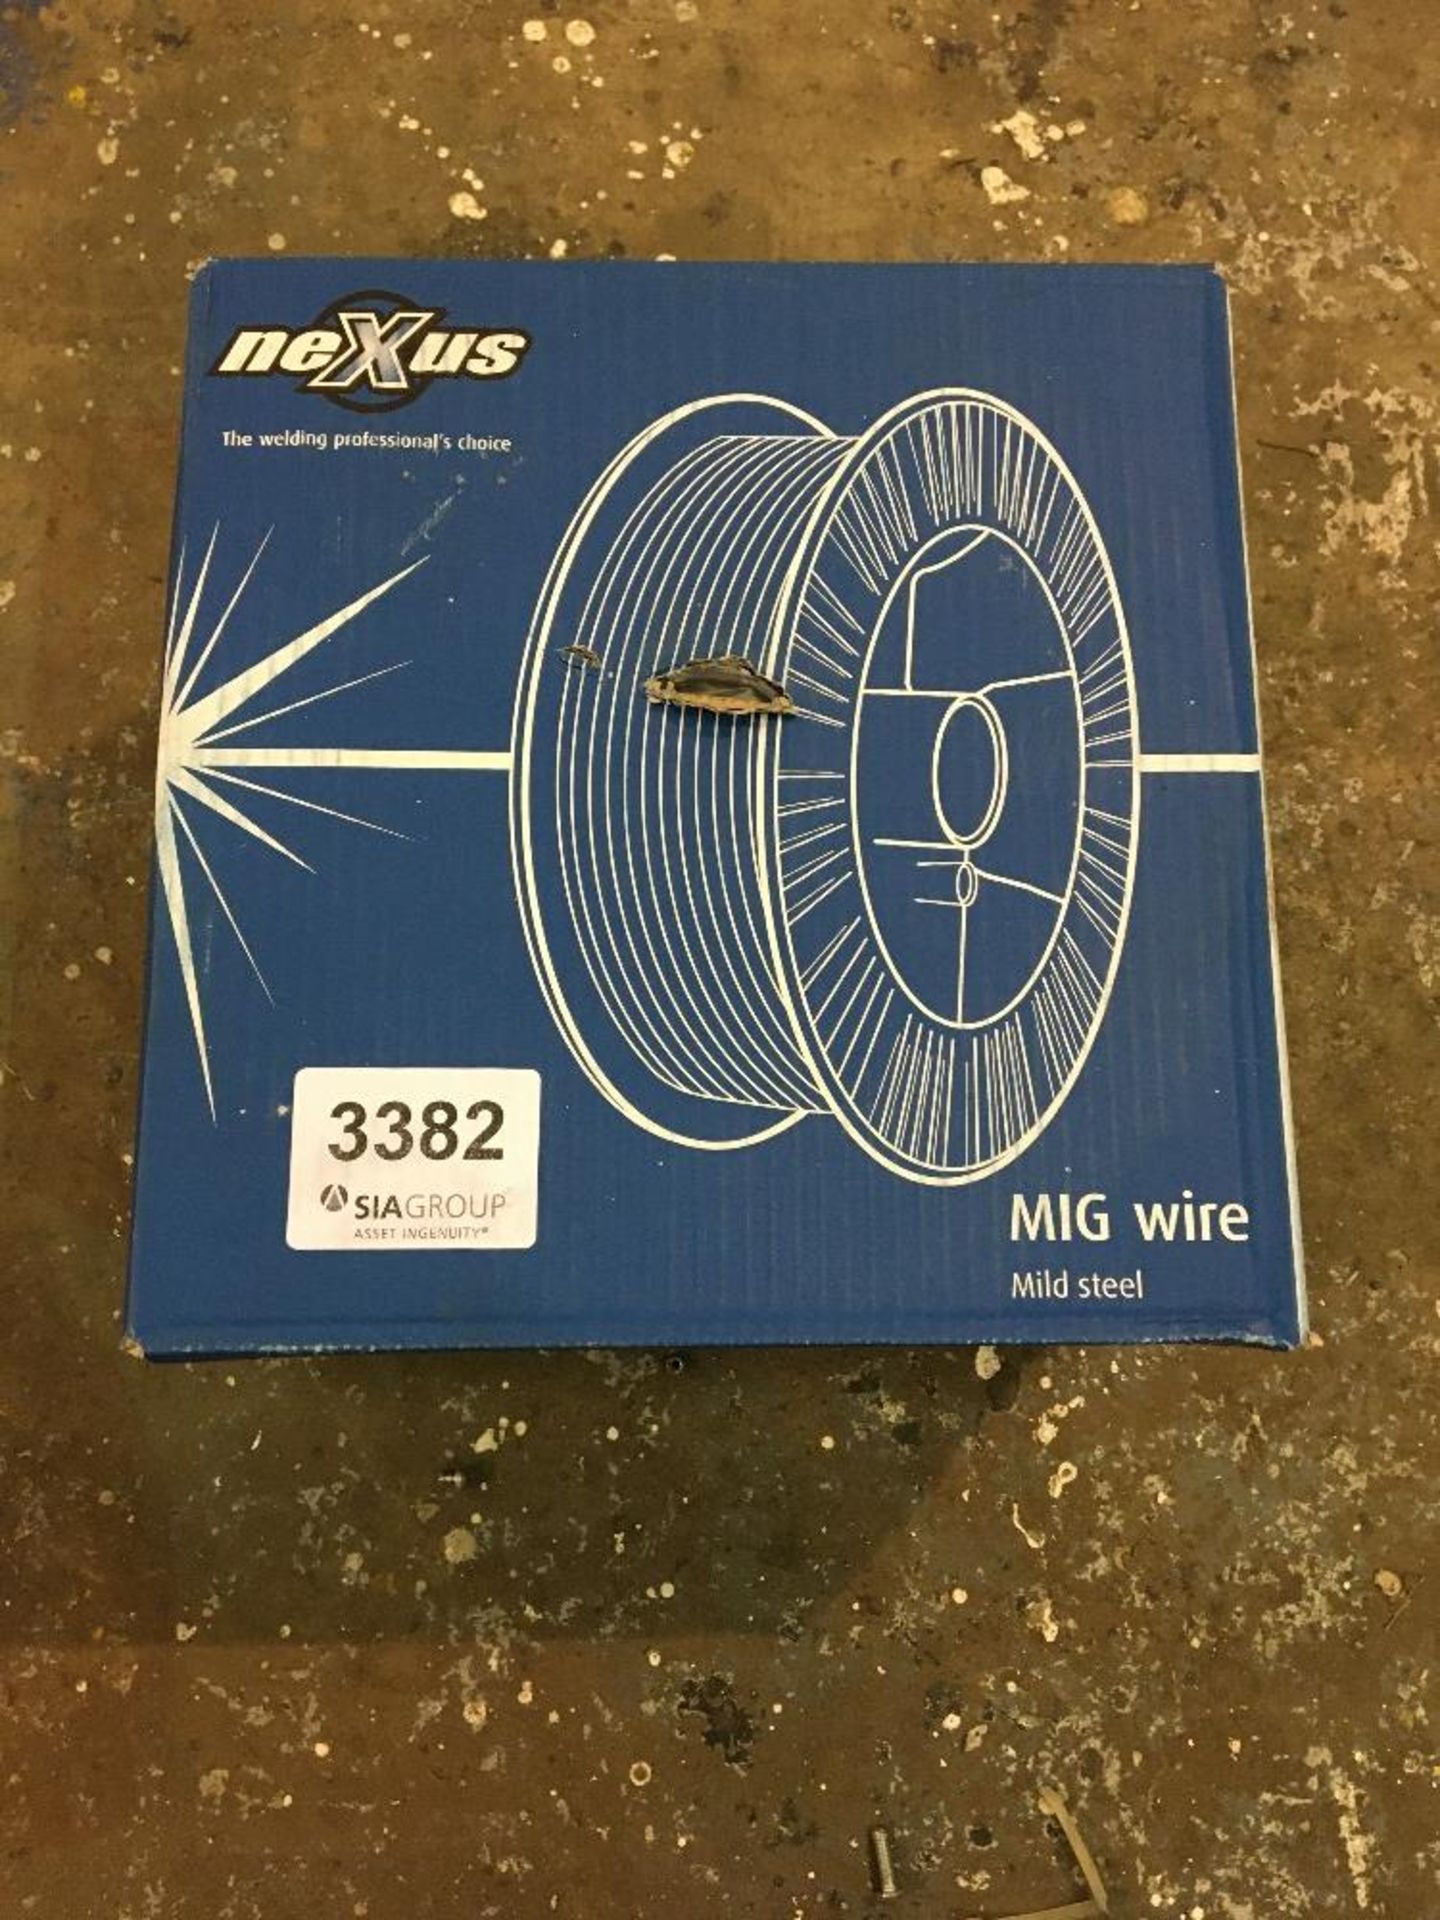 (2) Nexus SG2 1.0mm mild steel Mig welding wire with plastic spool boxed